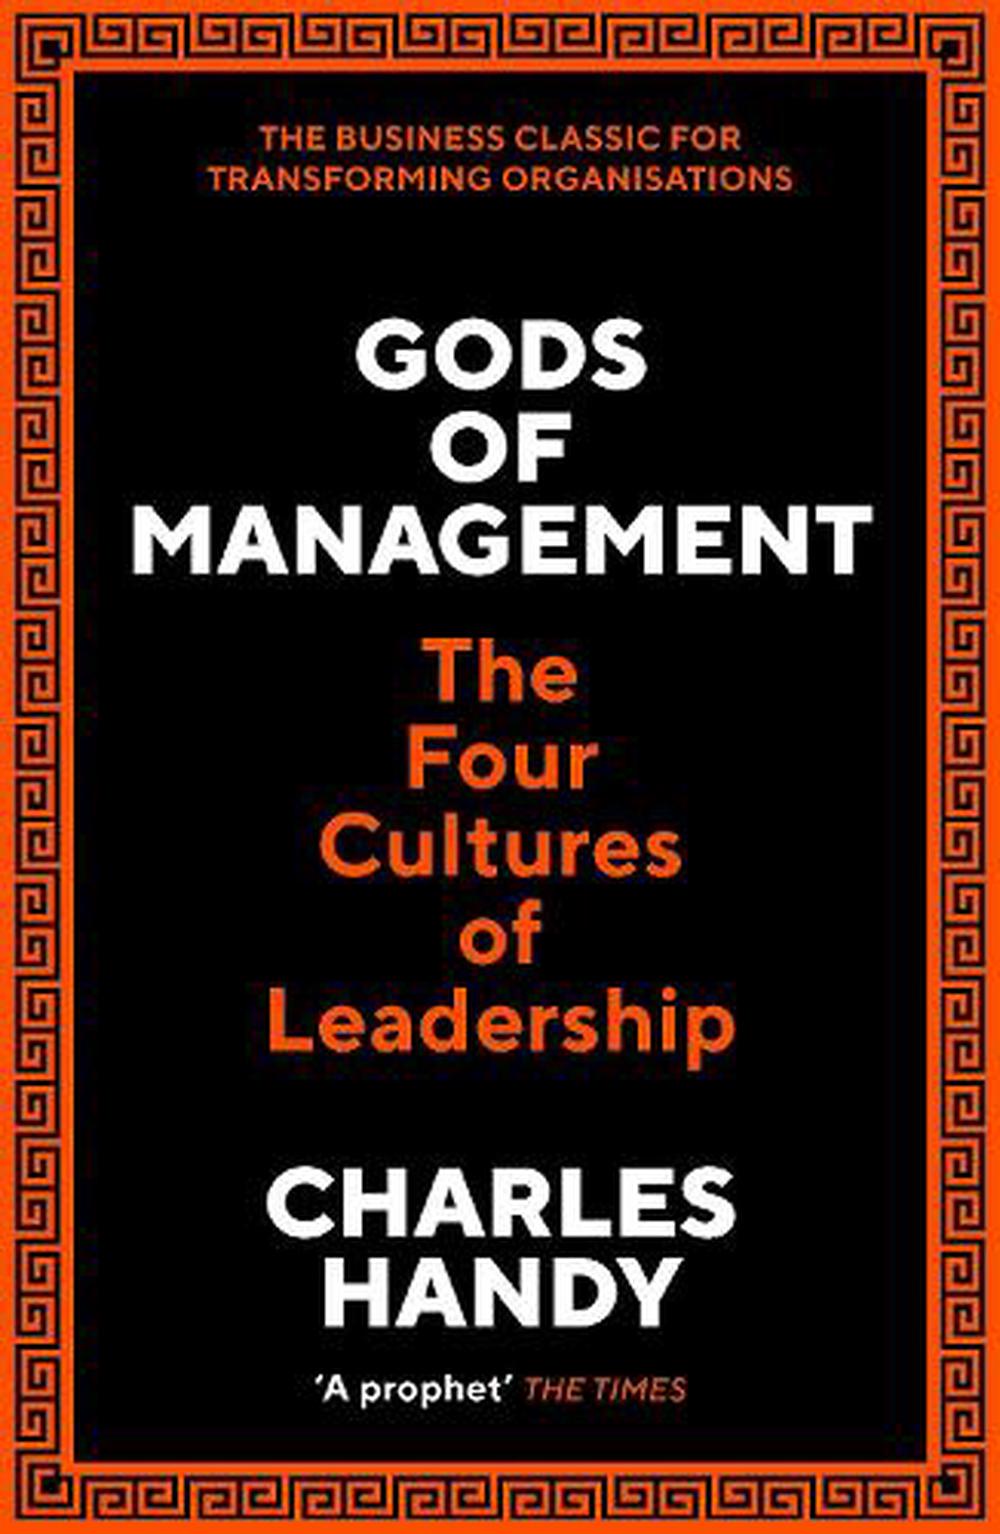 Management of Change Charles Handy